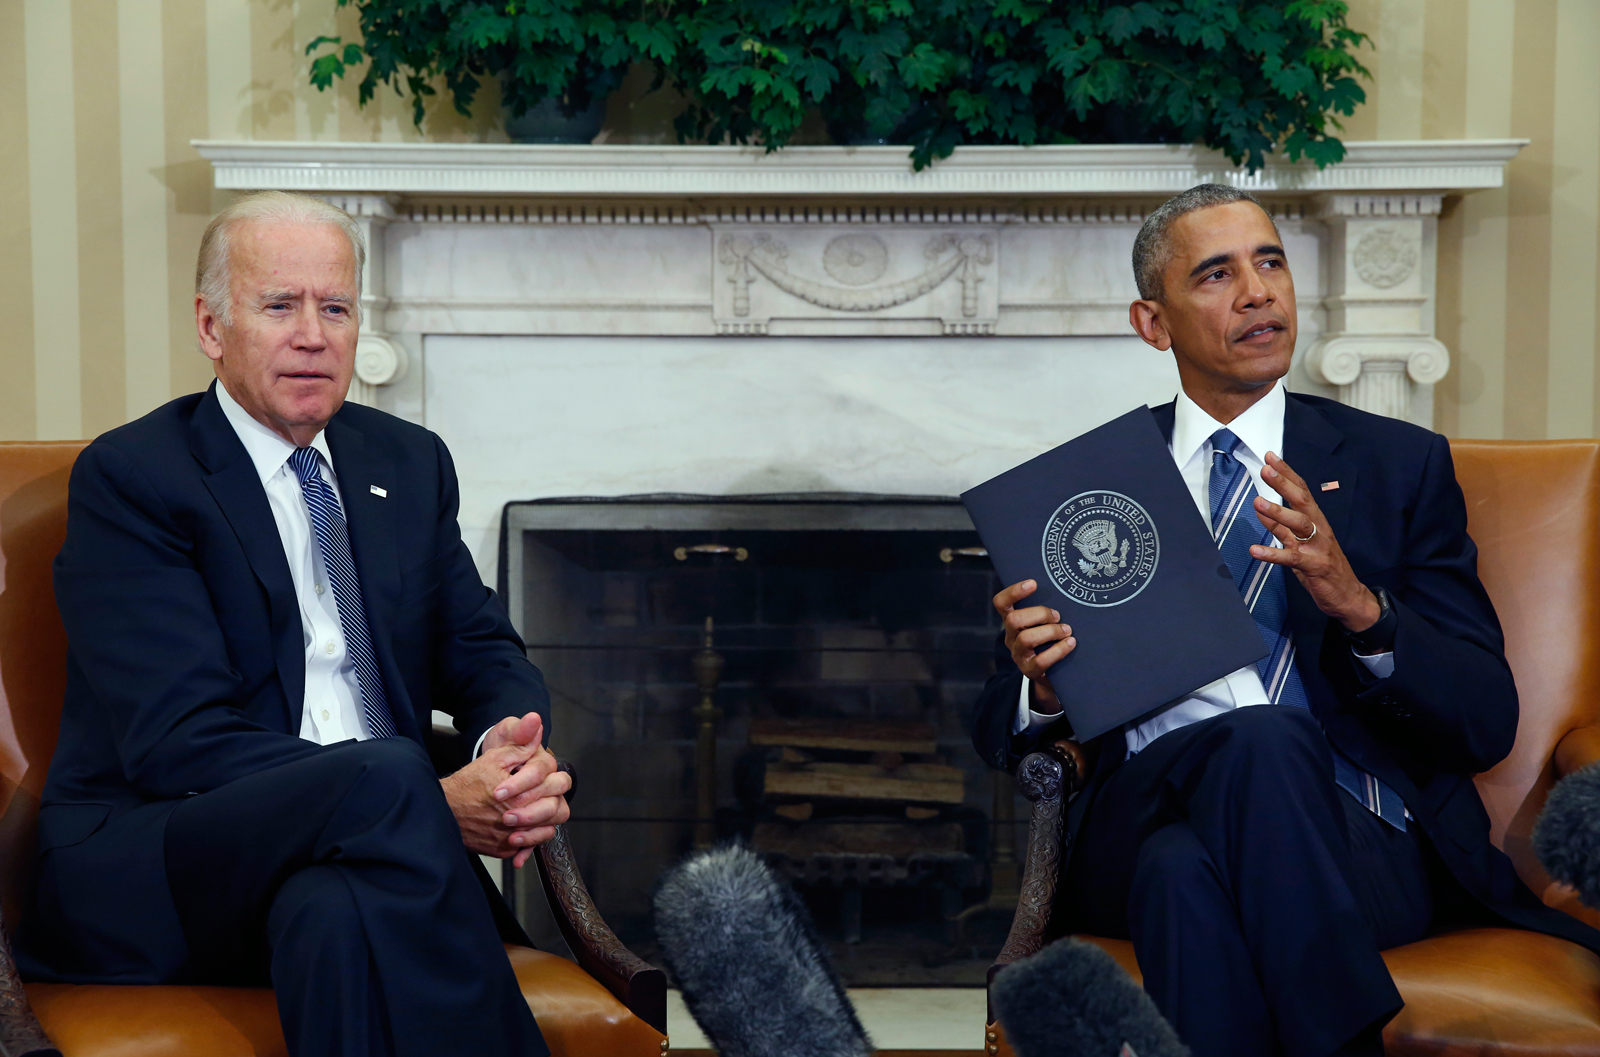 Joe Biden and Barack Obama discuss the Cancer Moonshot Report.